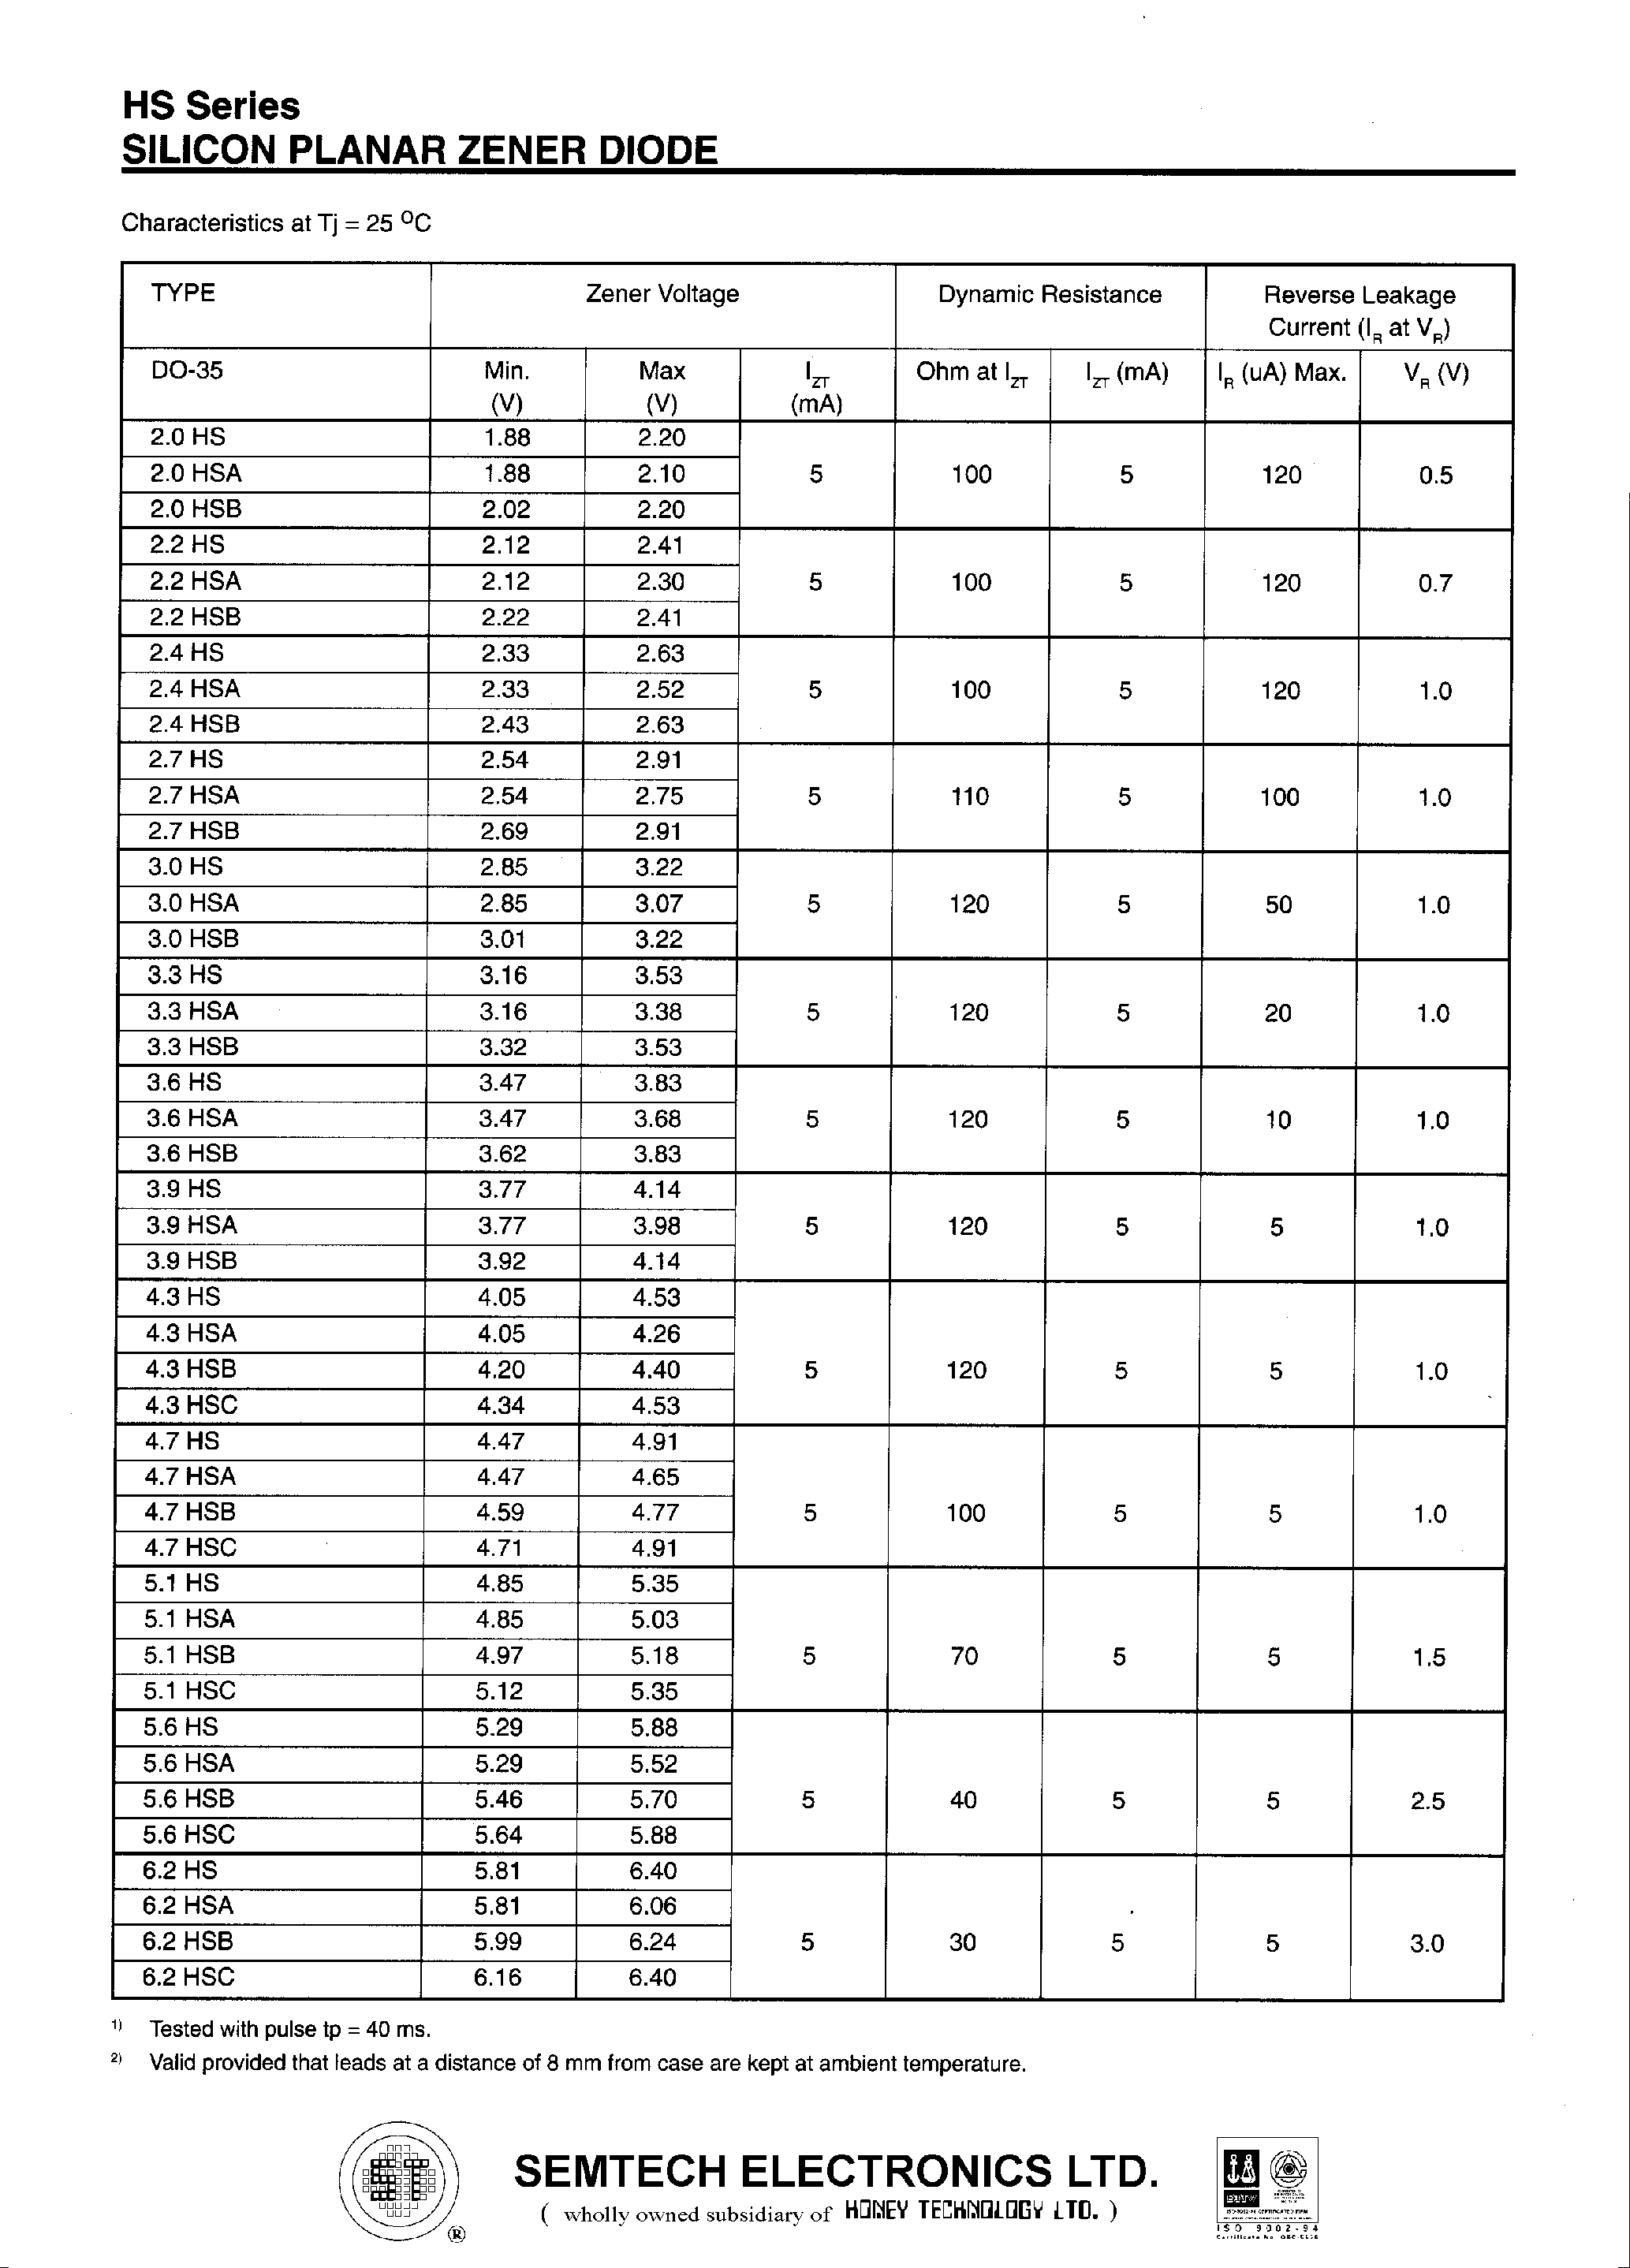 Datasheet 6.8HSA - SILICON PLANAR ZENER DIODE page 2